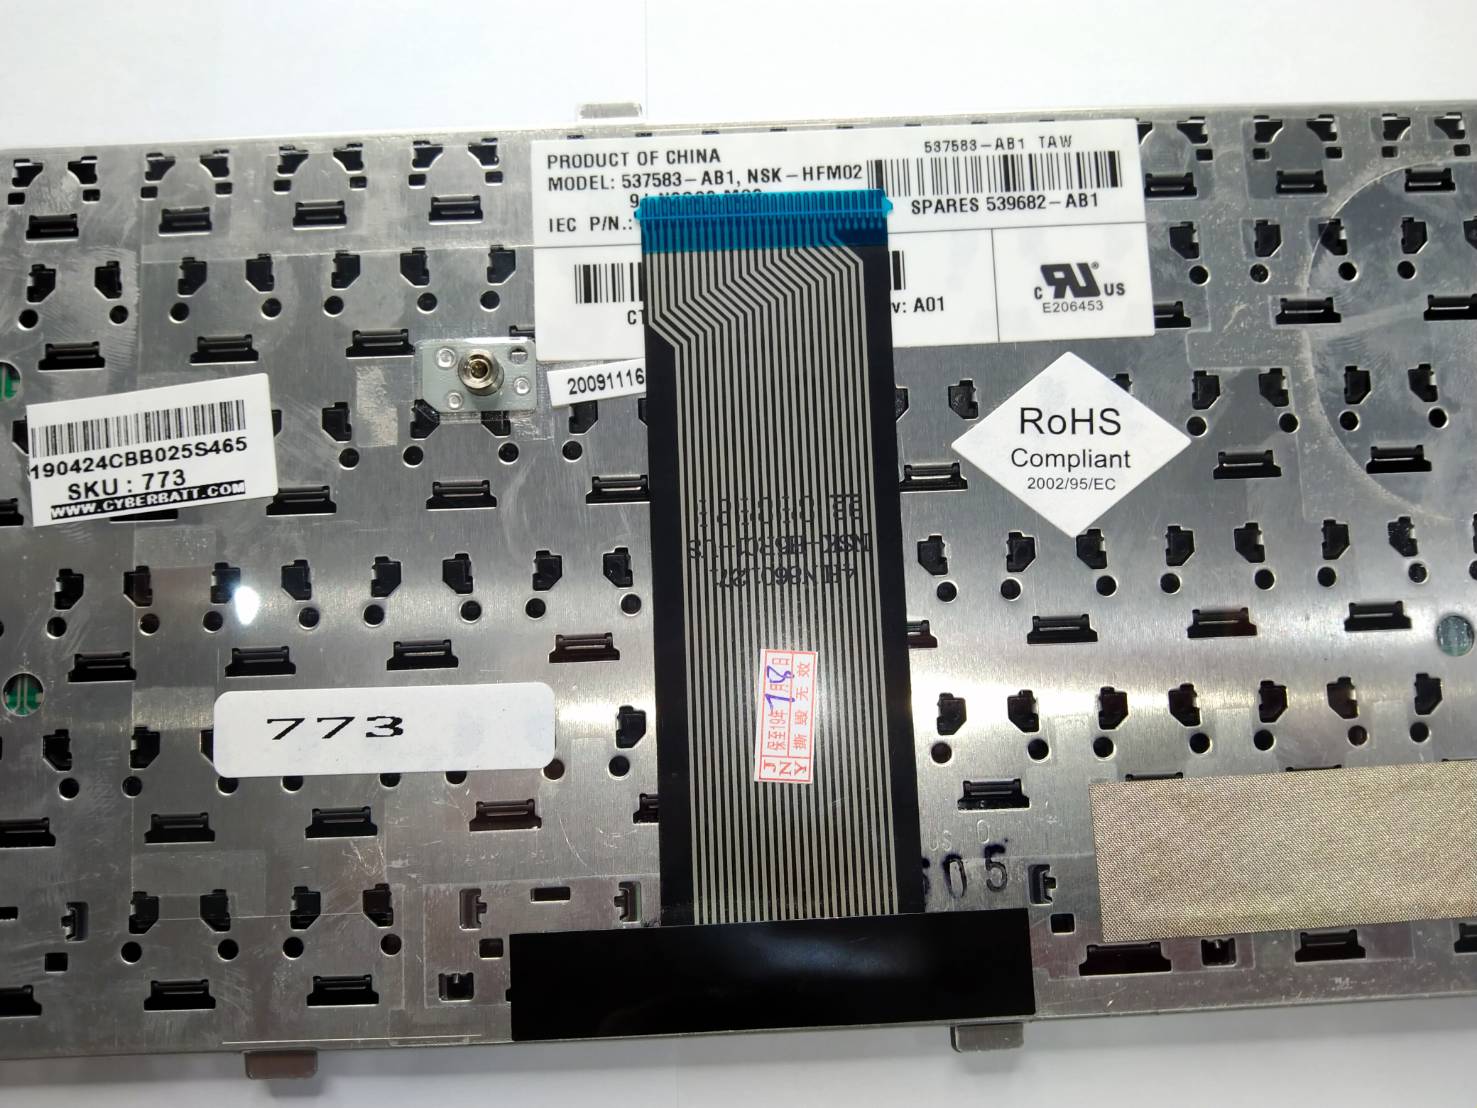 Keyboard HP/Compaq CQ510 Series Black TH 